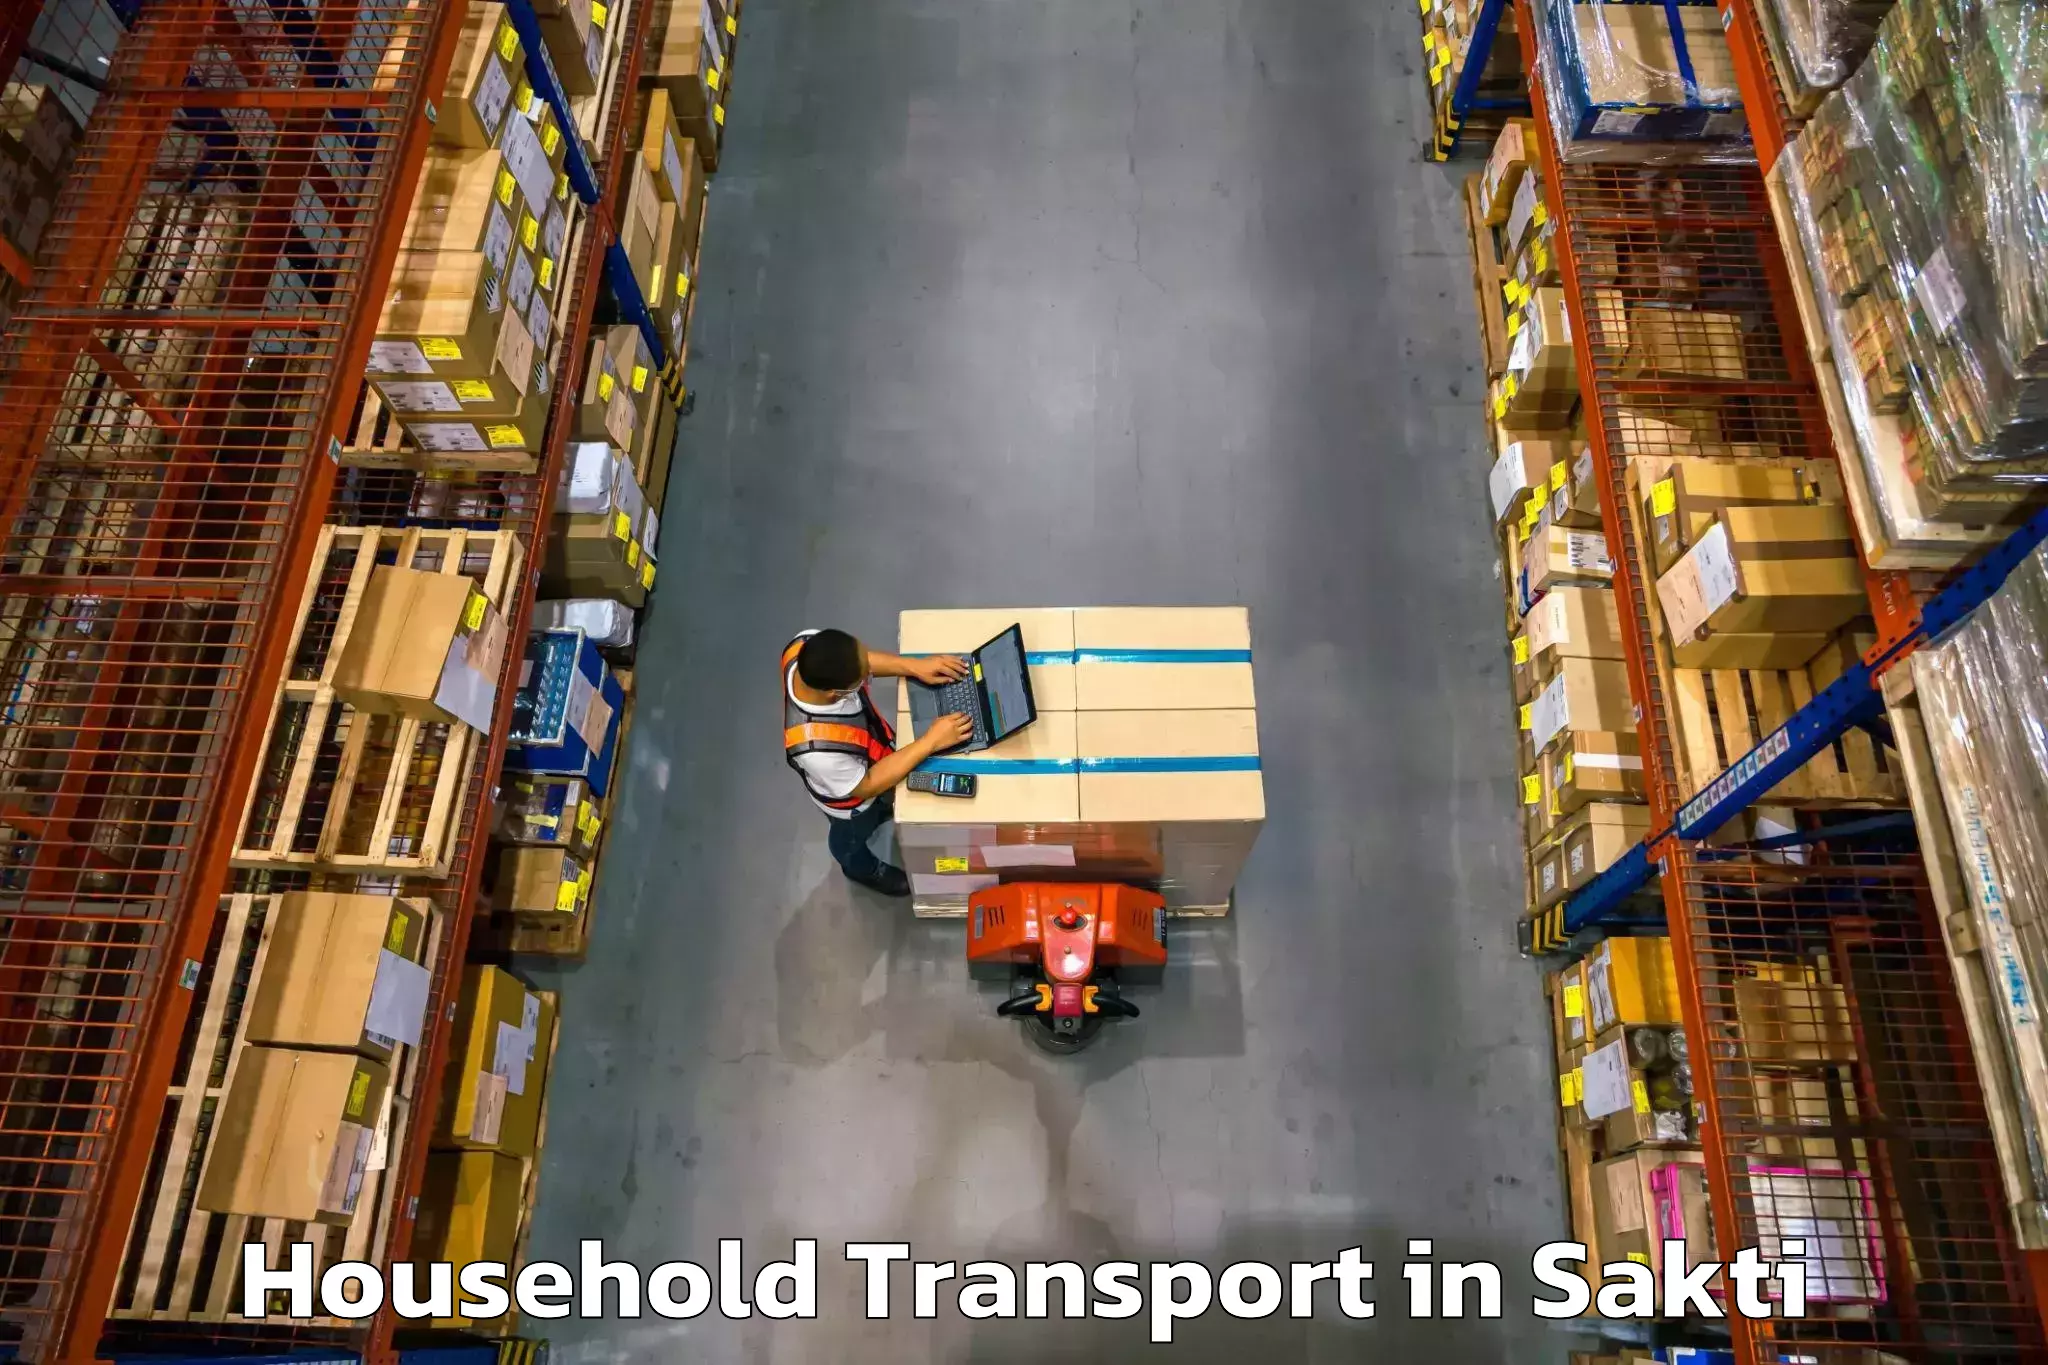 Household goods transport service in Sakti